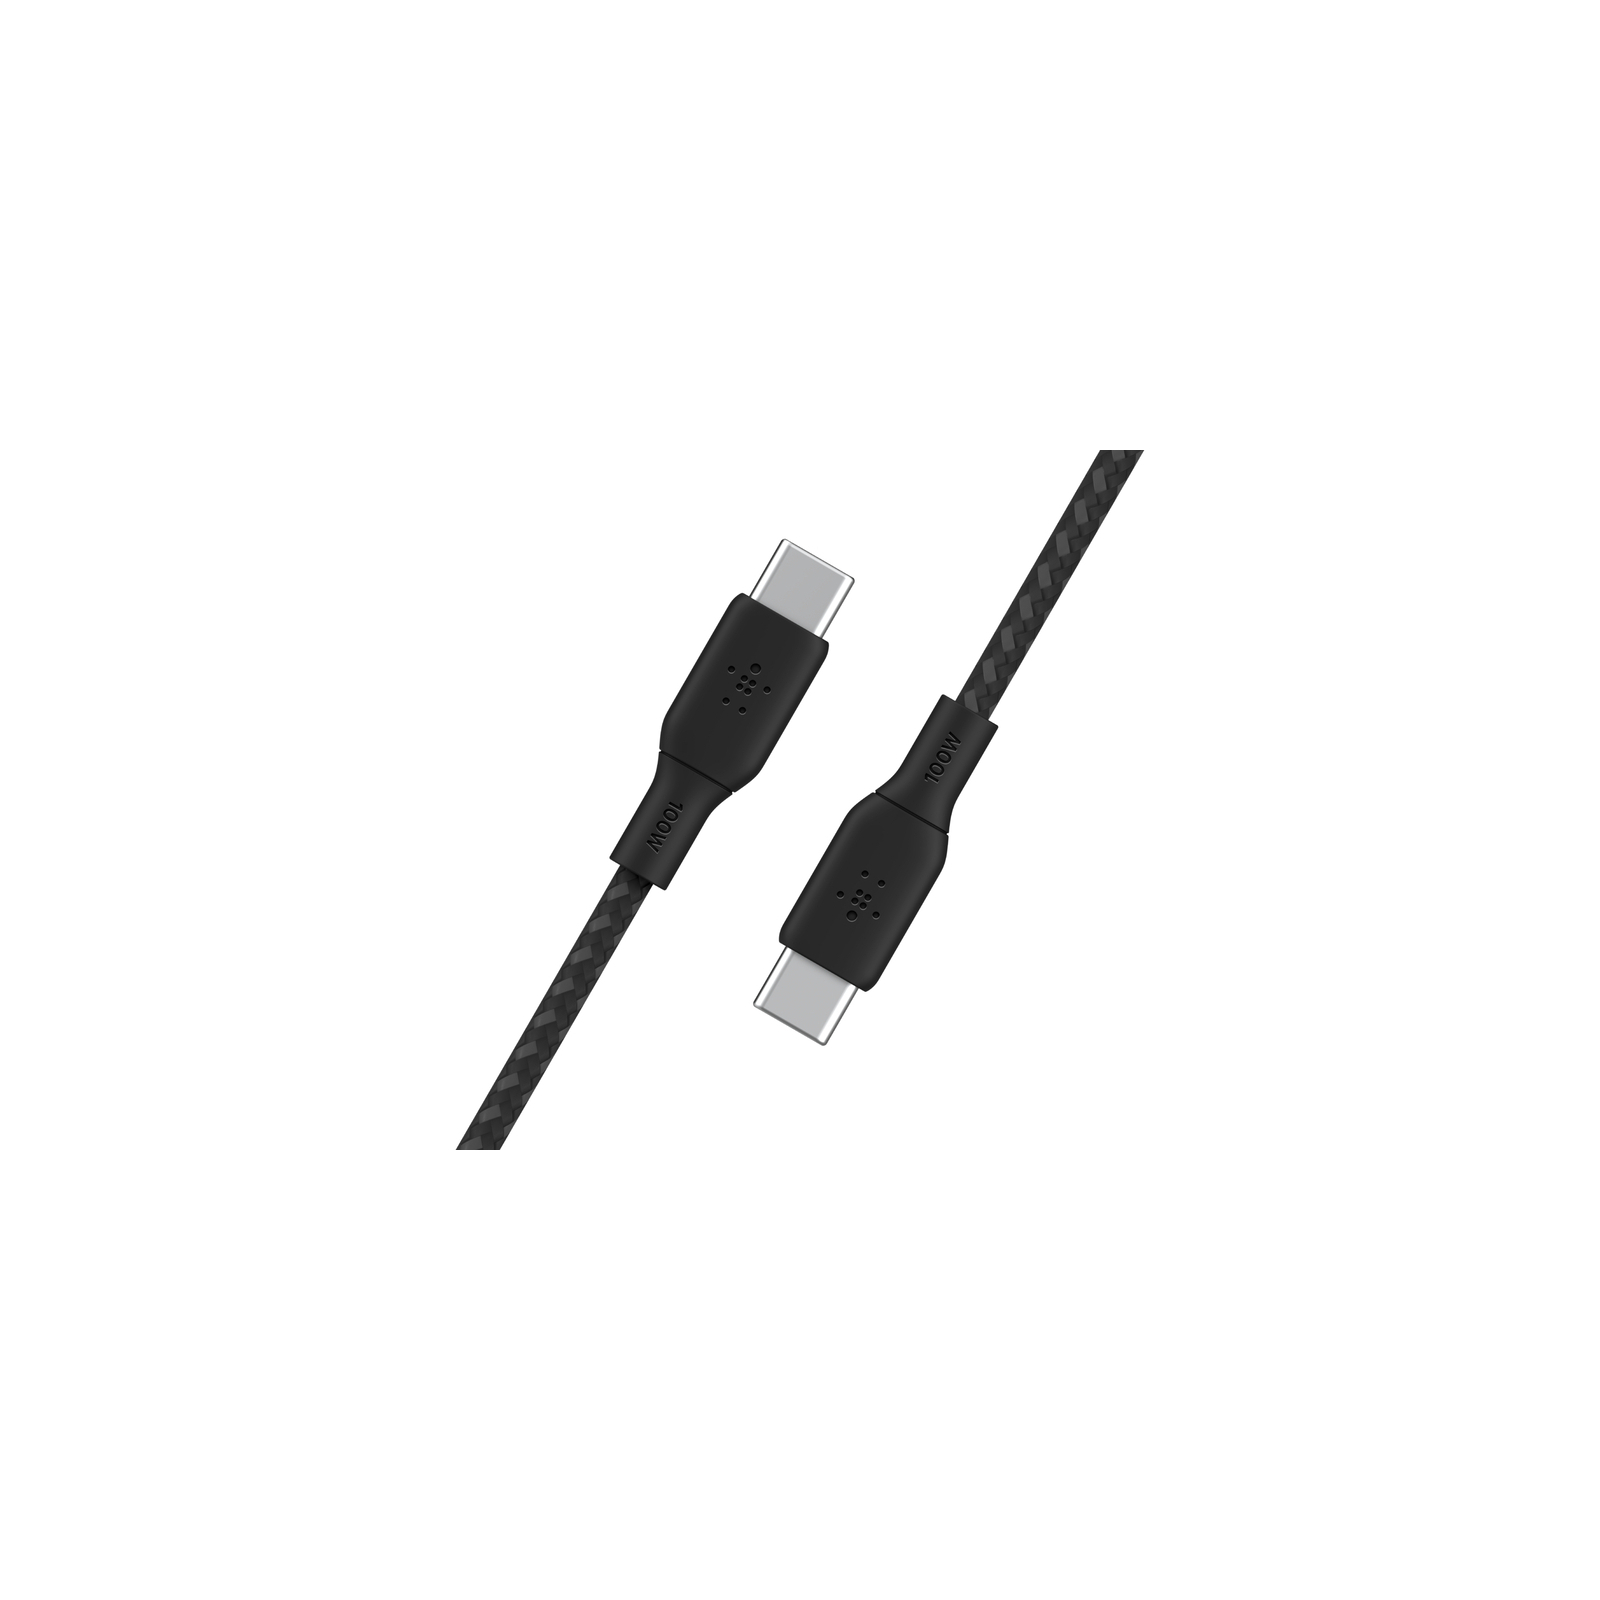 Дата кабель USB-C to USB-C 3.0m 100W white Belkin (CAB014BT3MWH) изображение 4